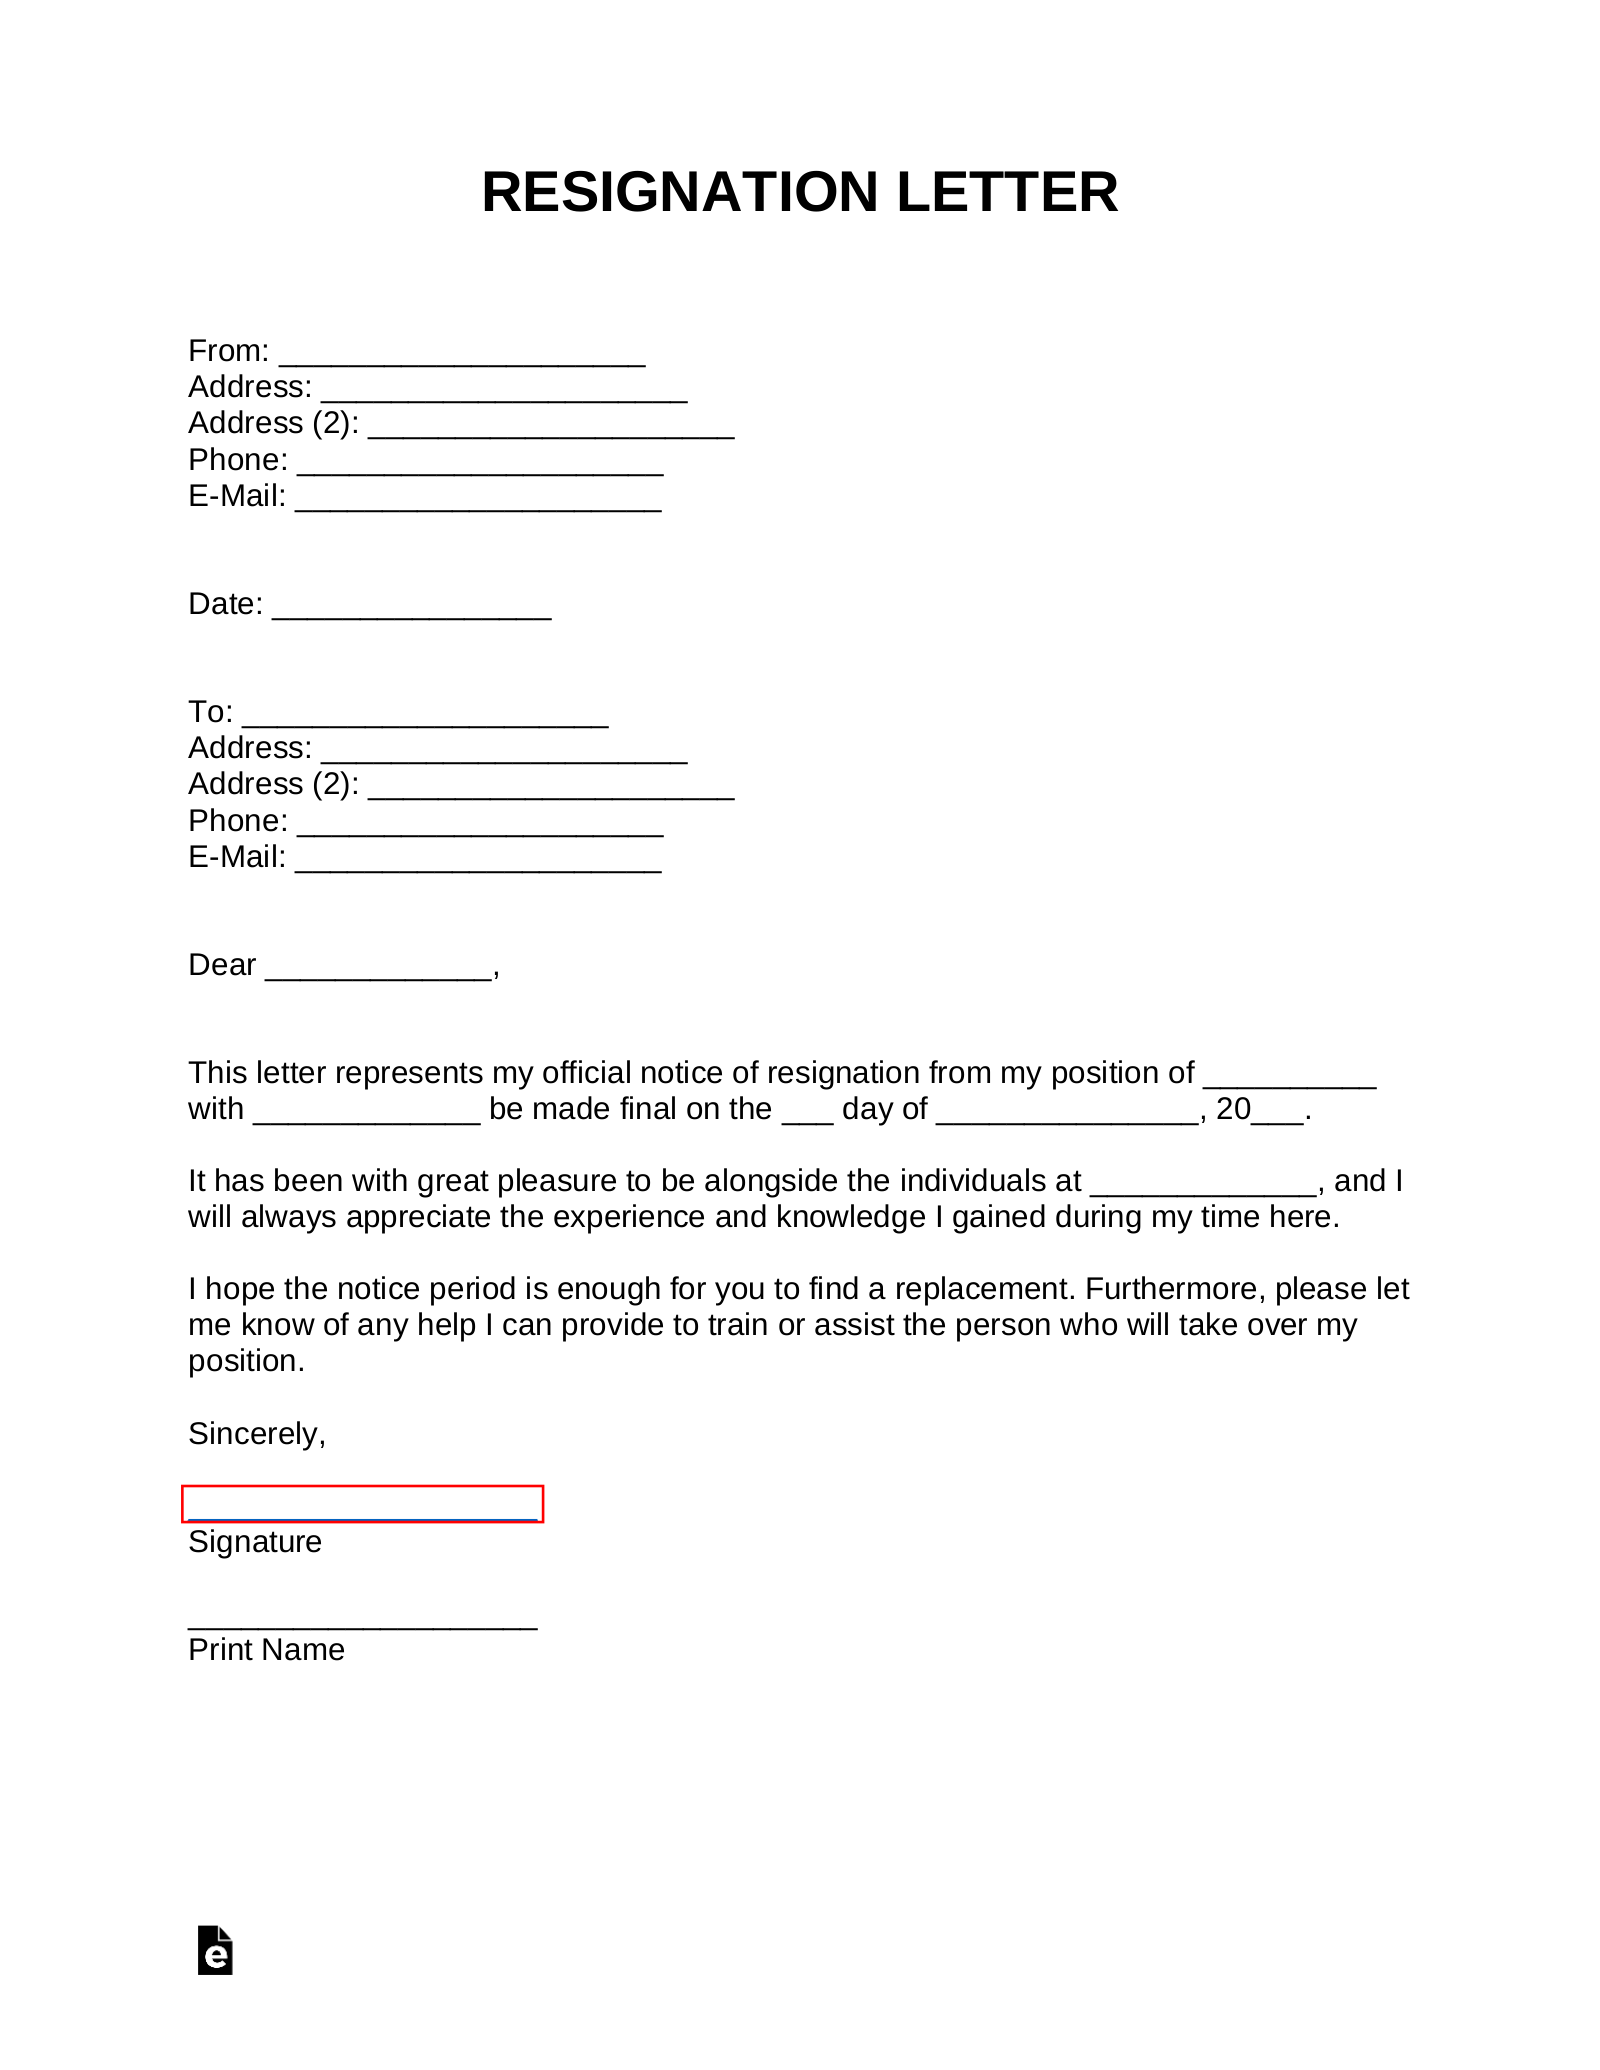 Resignation Letter Sample For New Job from eforms.com